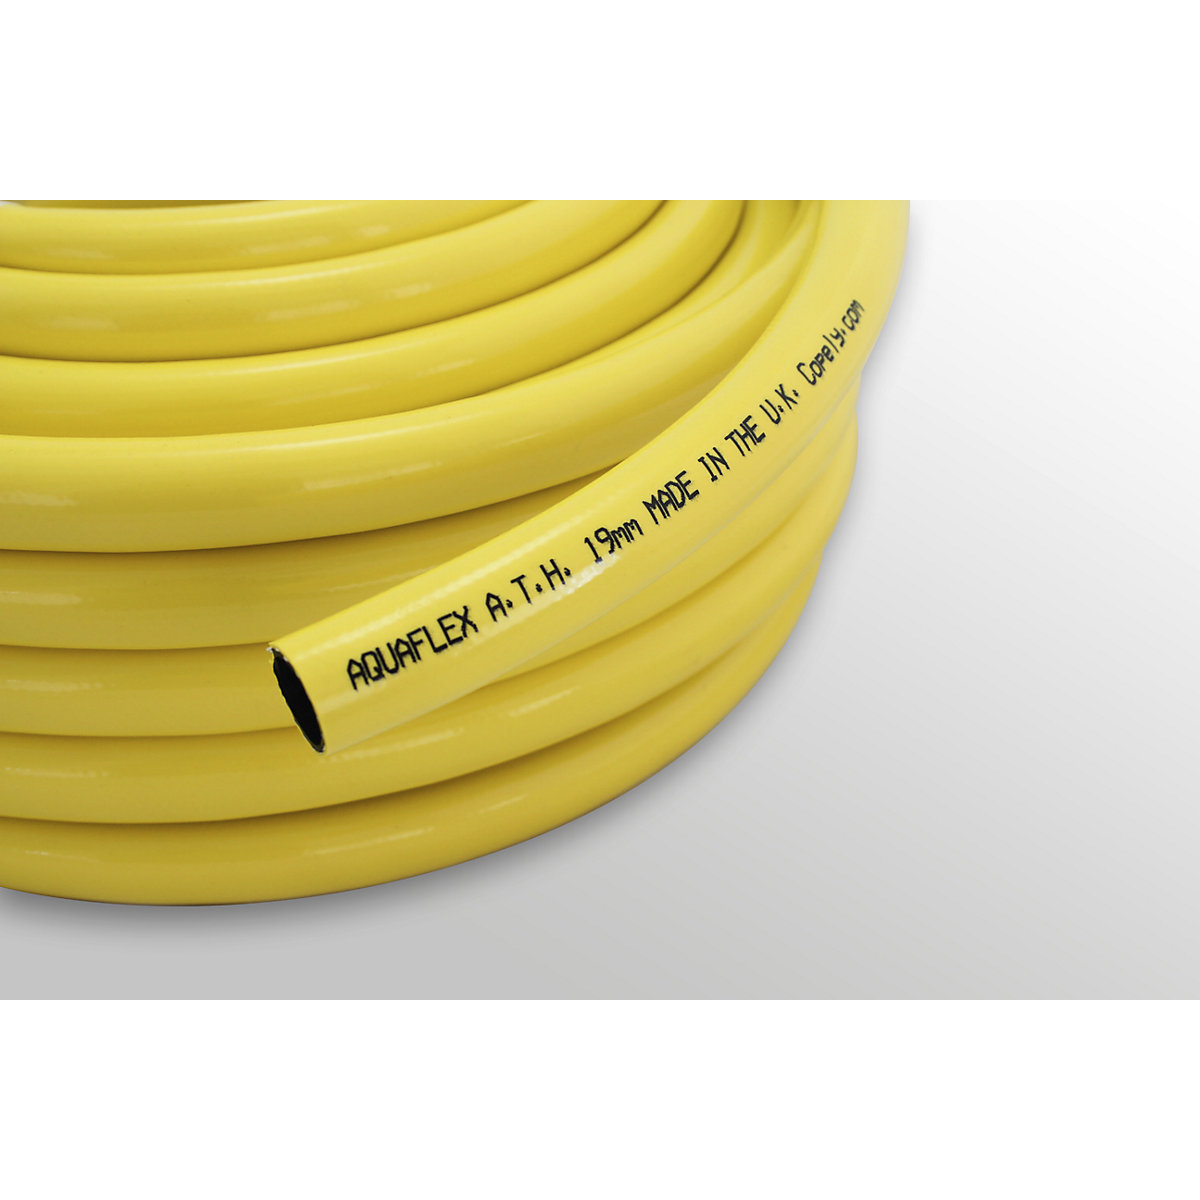 Water hose made of PVC, yellow - COBA